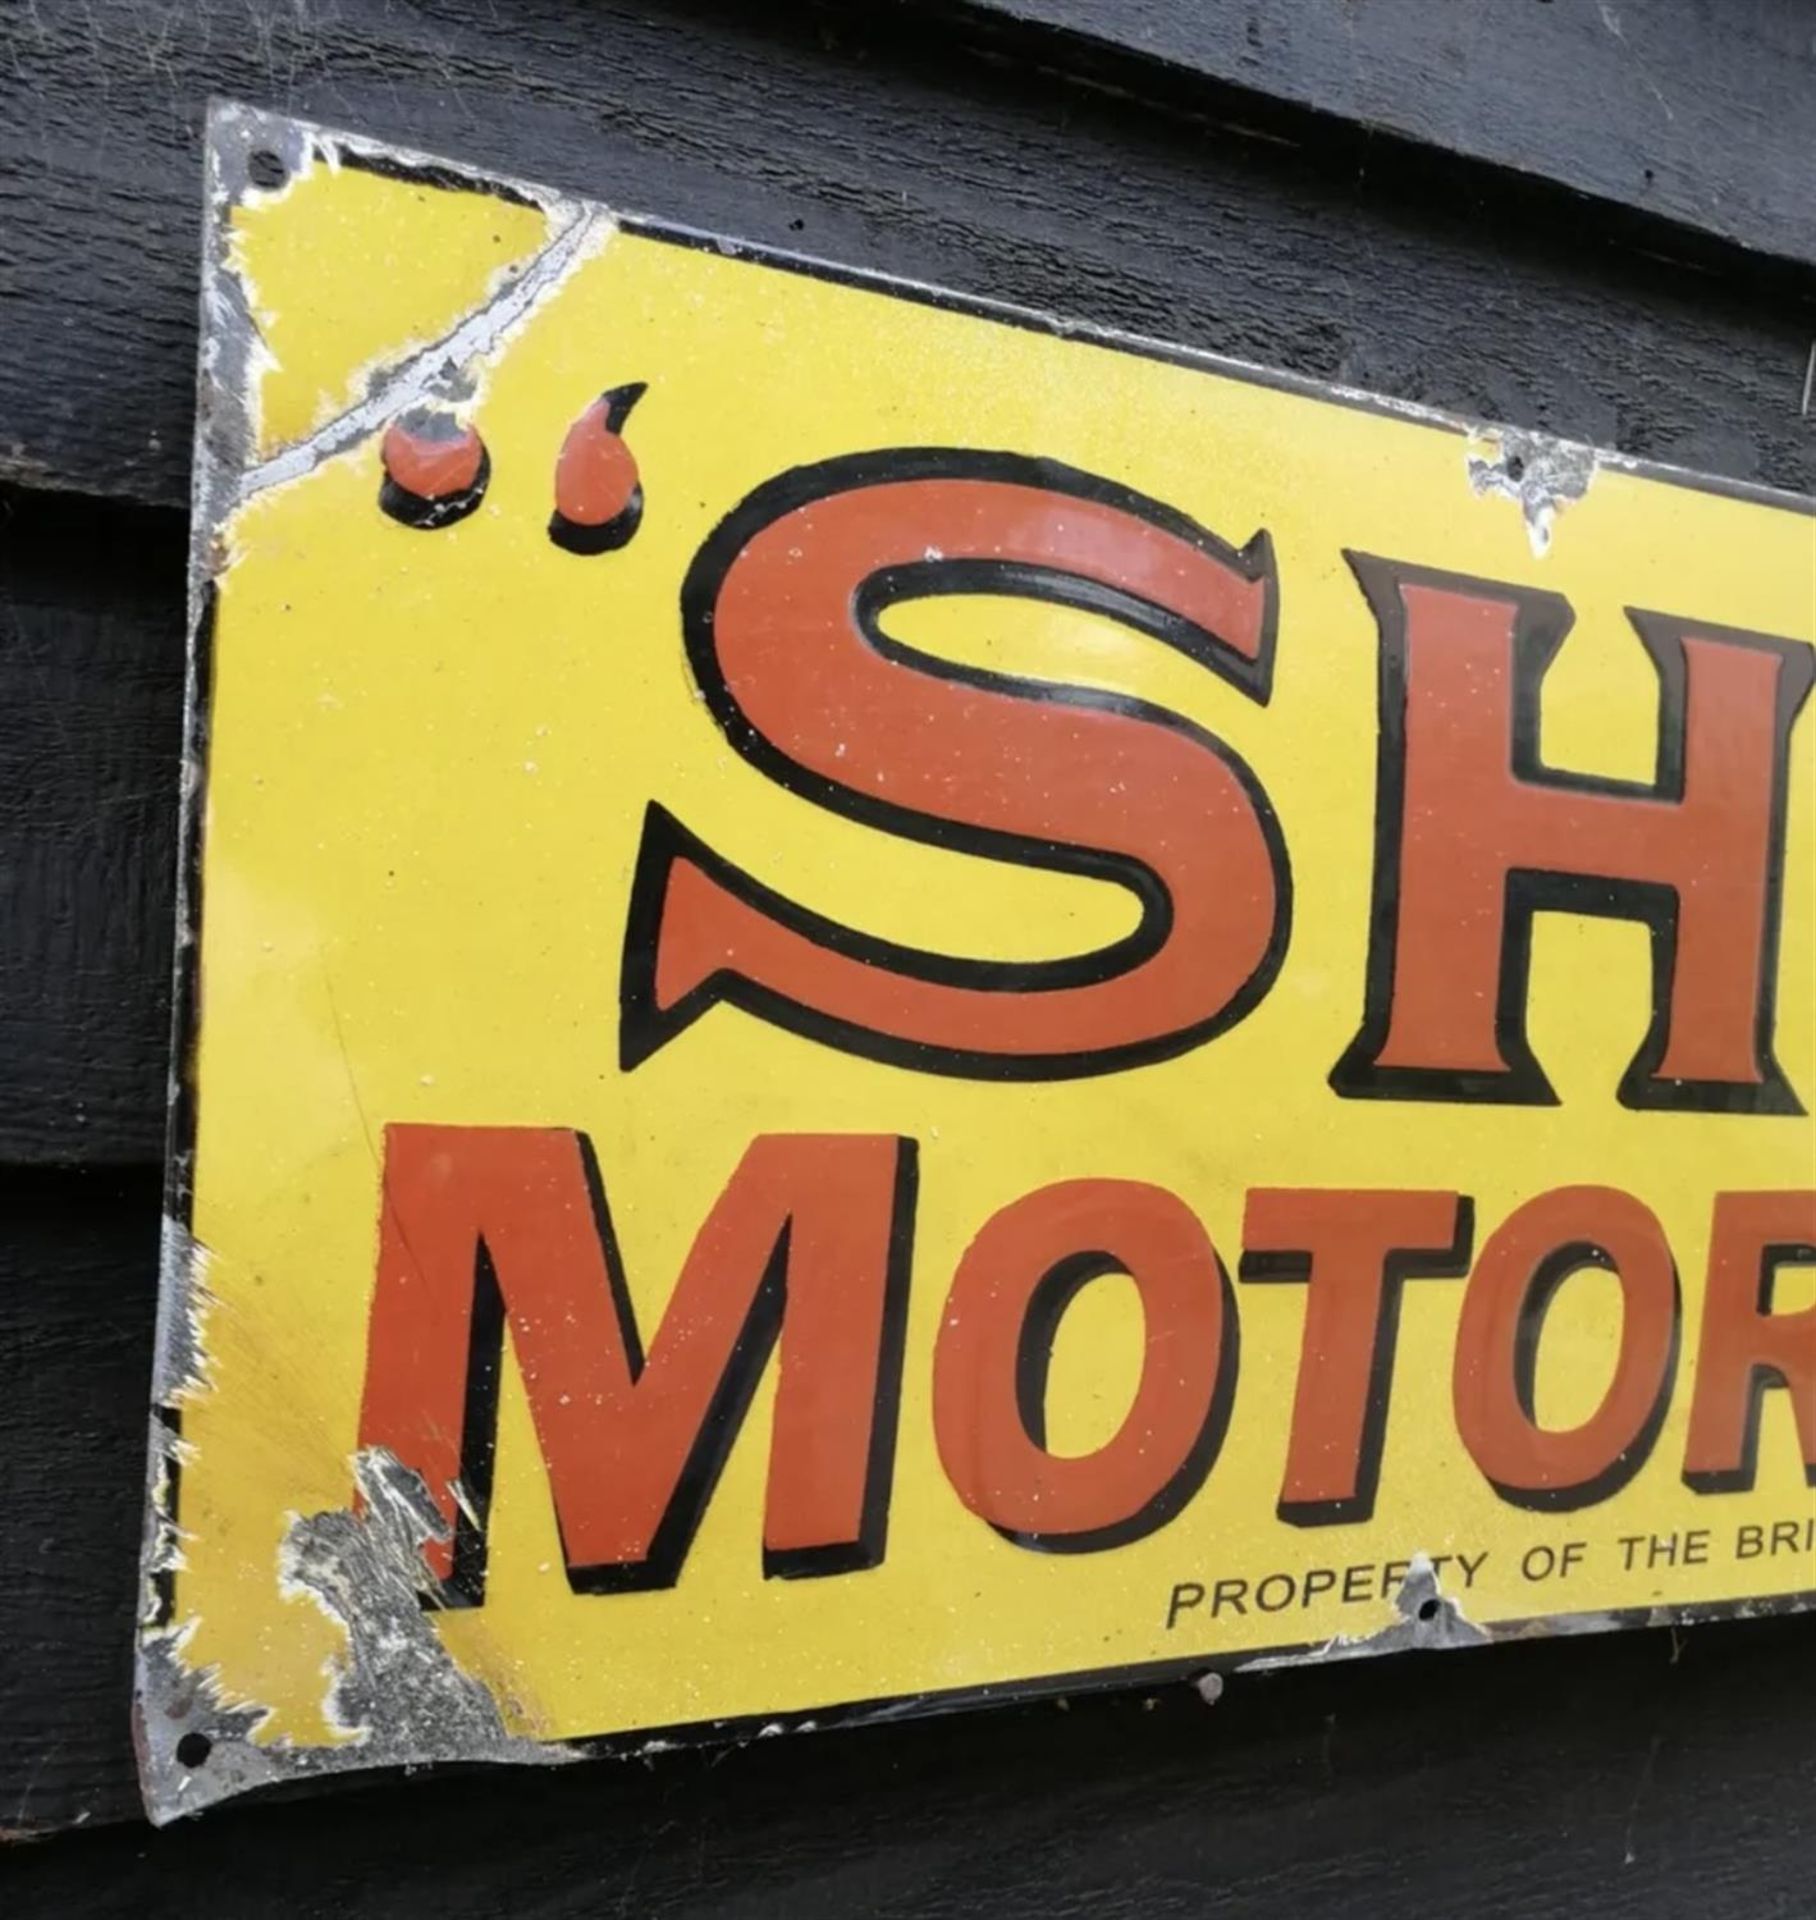 Vintage Vitreous-Enamel on Metal "Shell" Motor Spirit Advertising Sign - Image 2 of 7